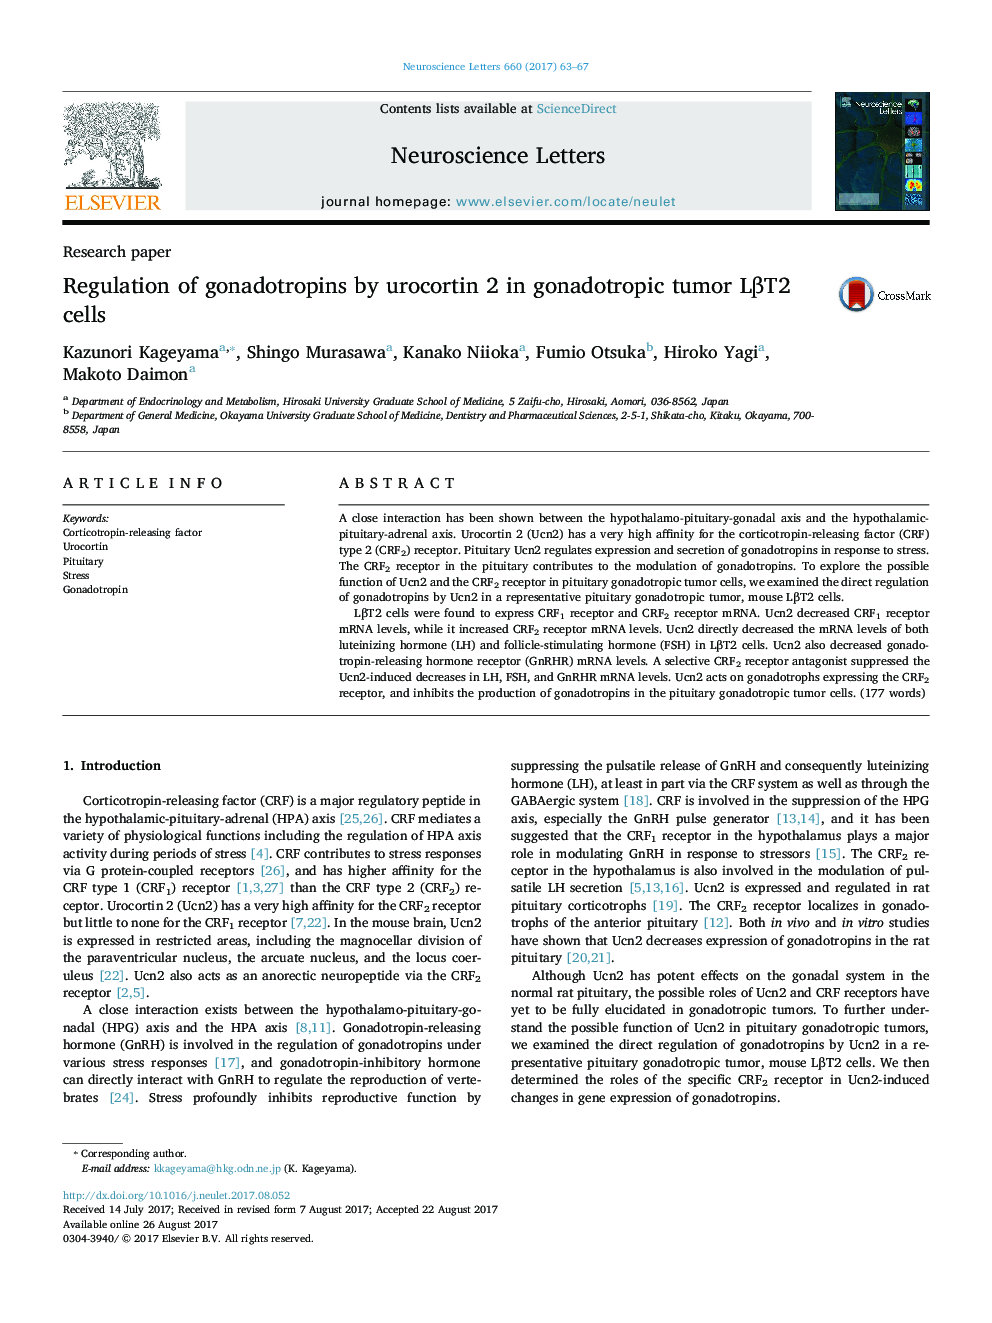 Regulation of gonadotropins by urocortin 2 in gonadotropic tumor LÎ²T2 cells